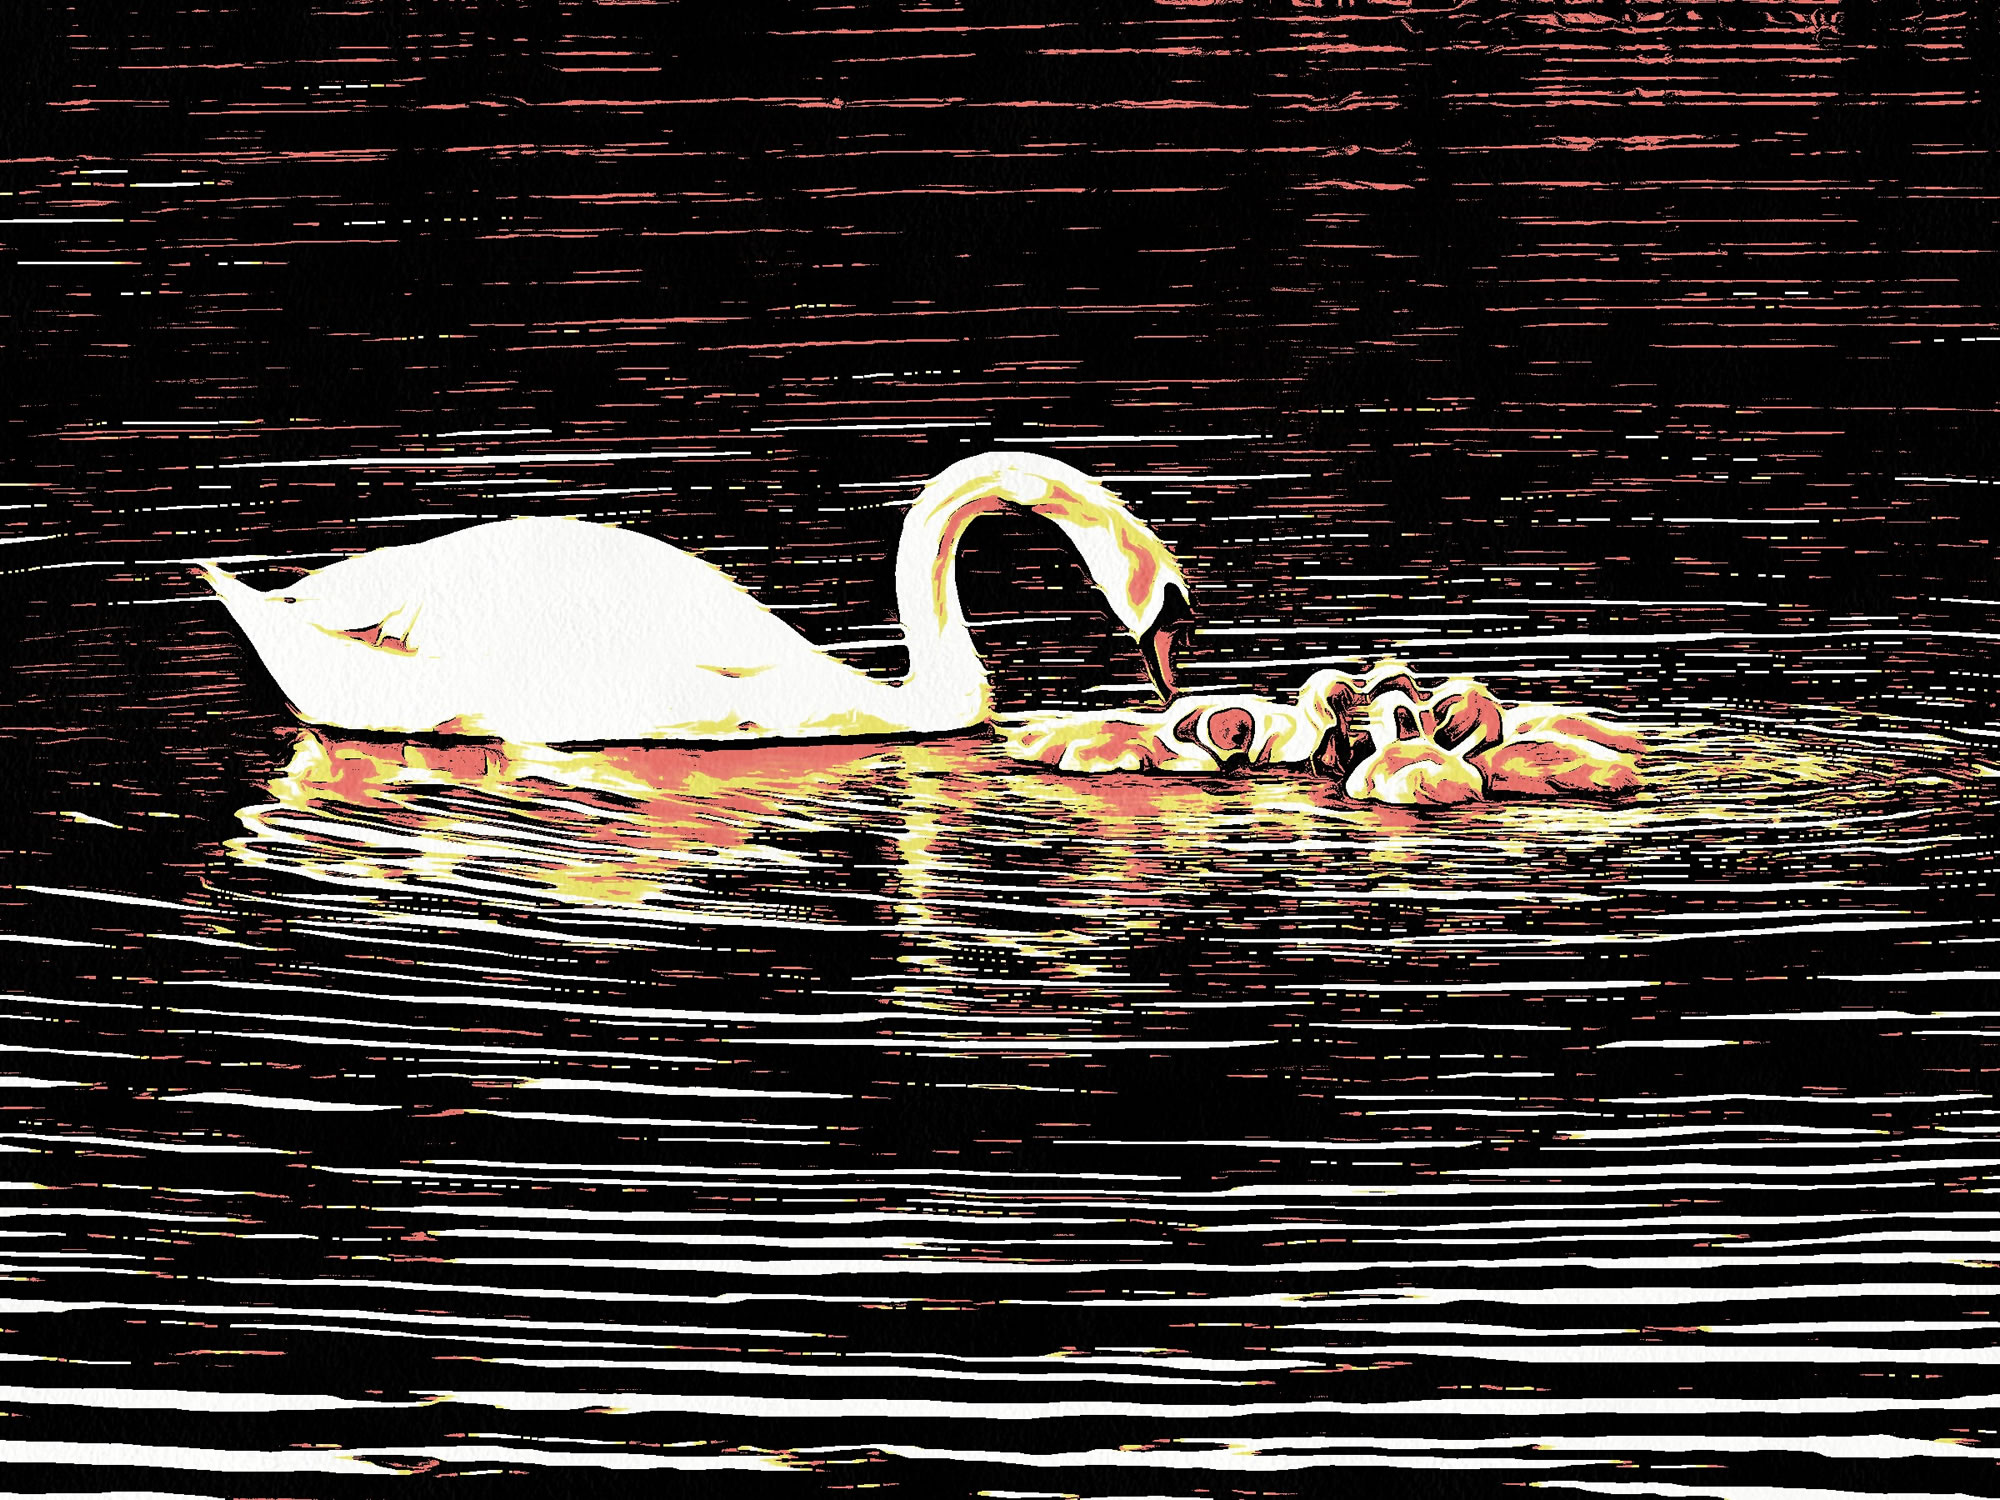 Swan art picture 56 - art image 4